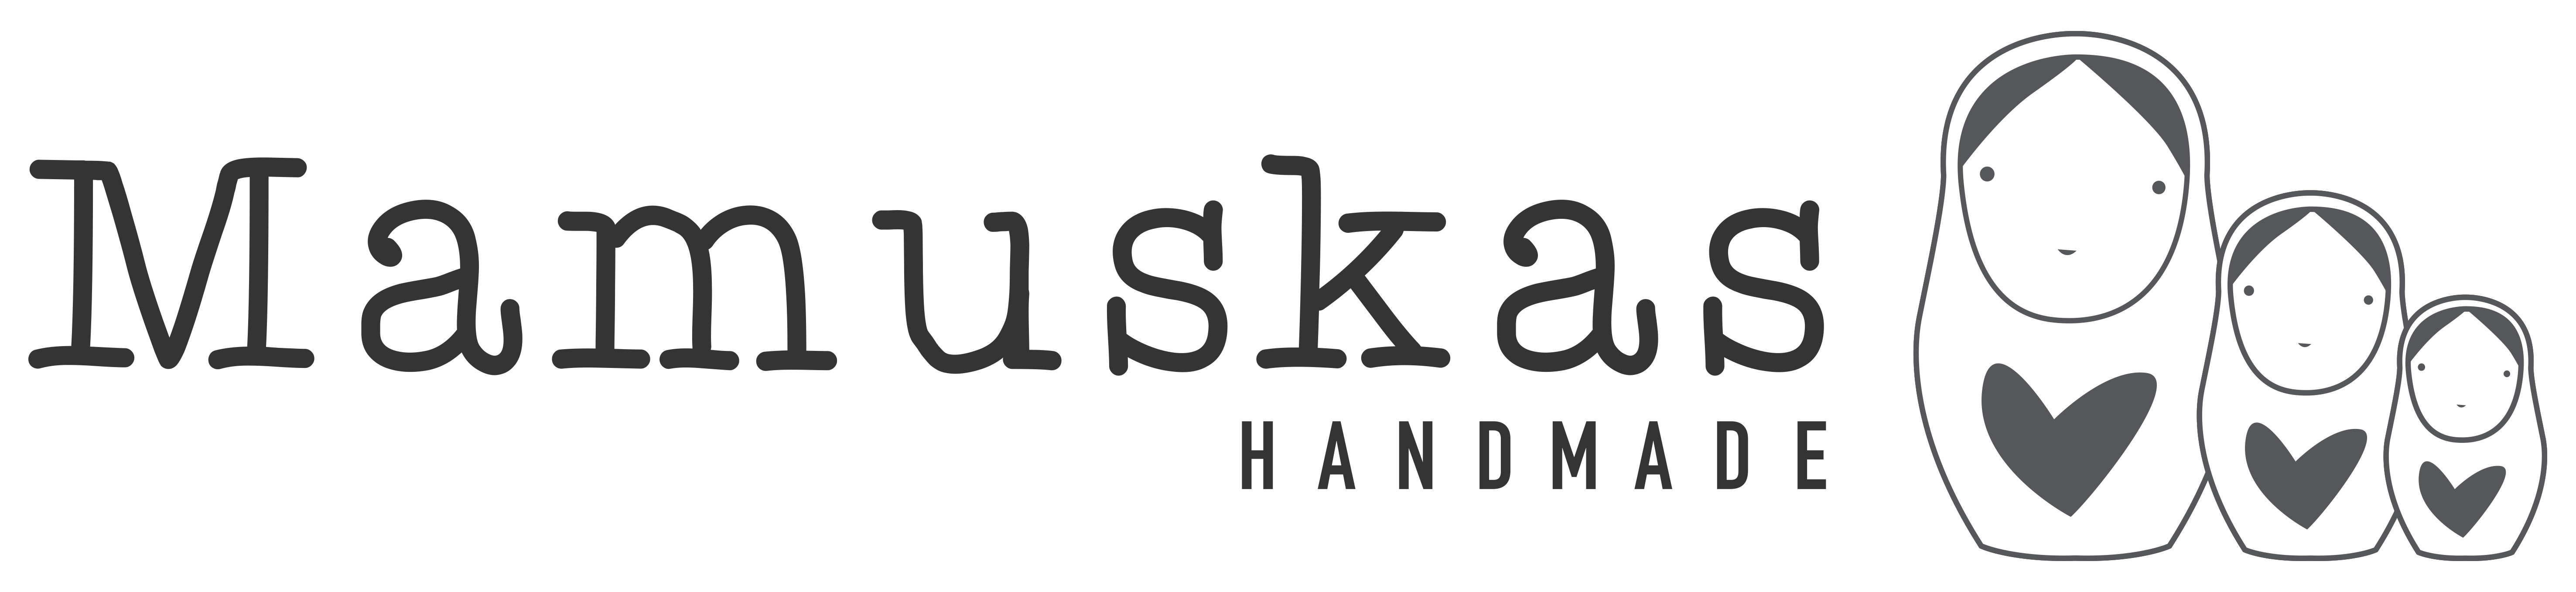 Mamuskas_handmade 